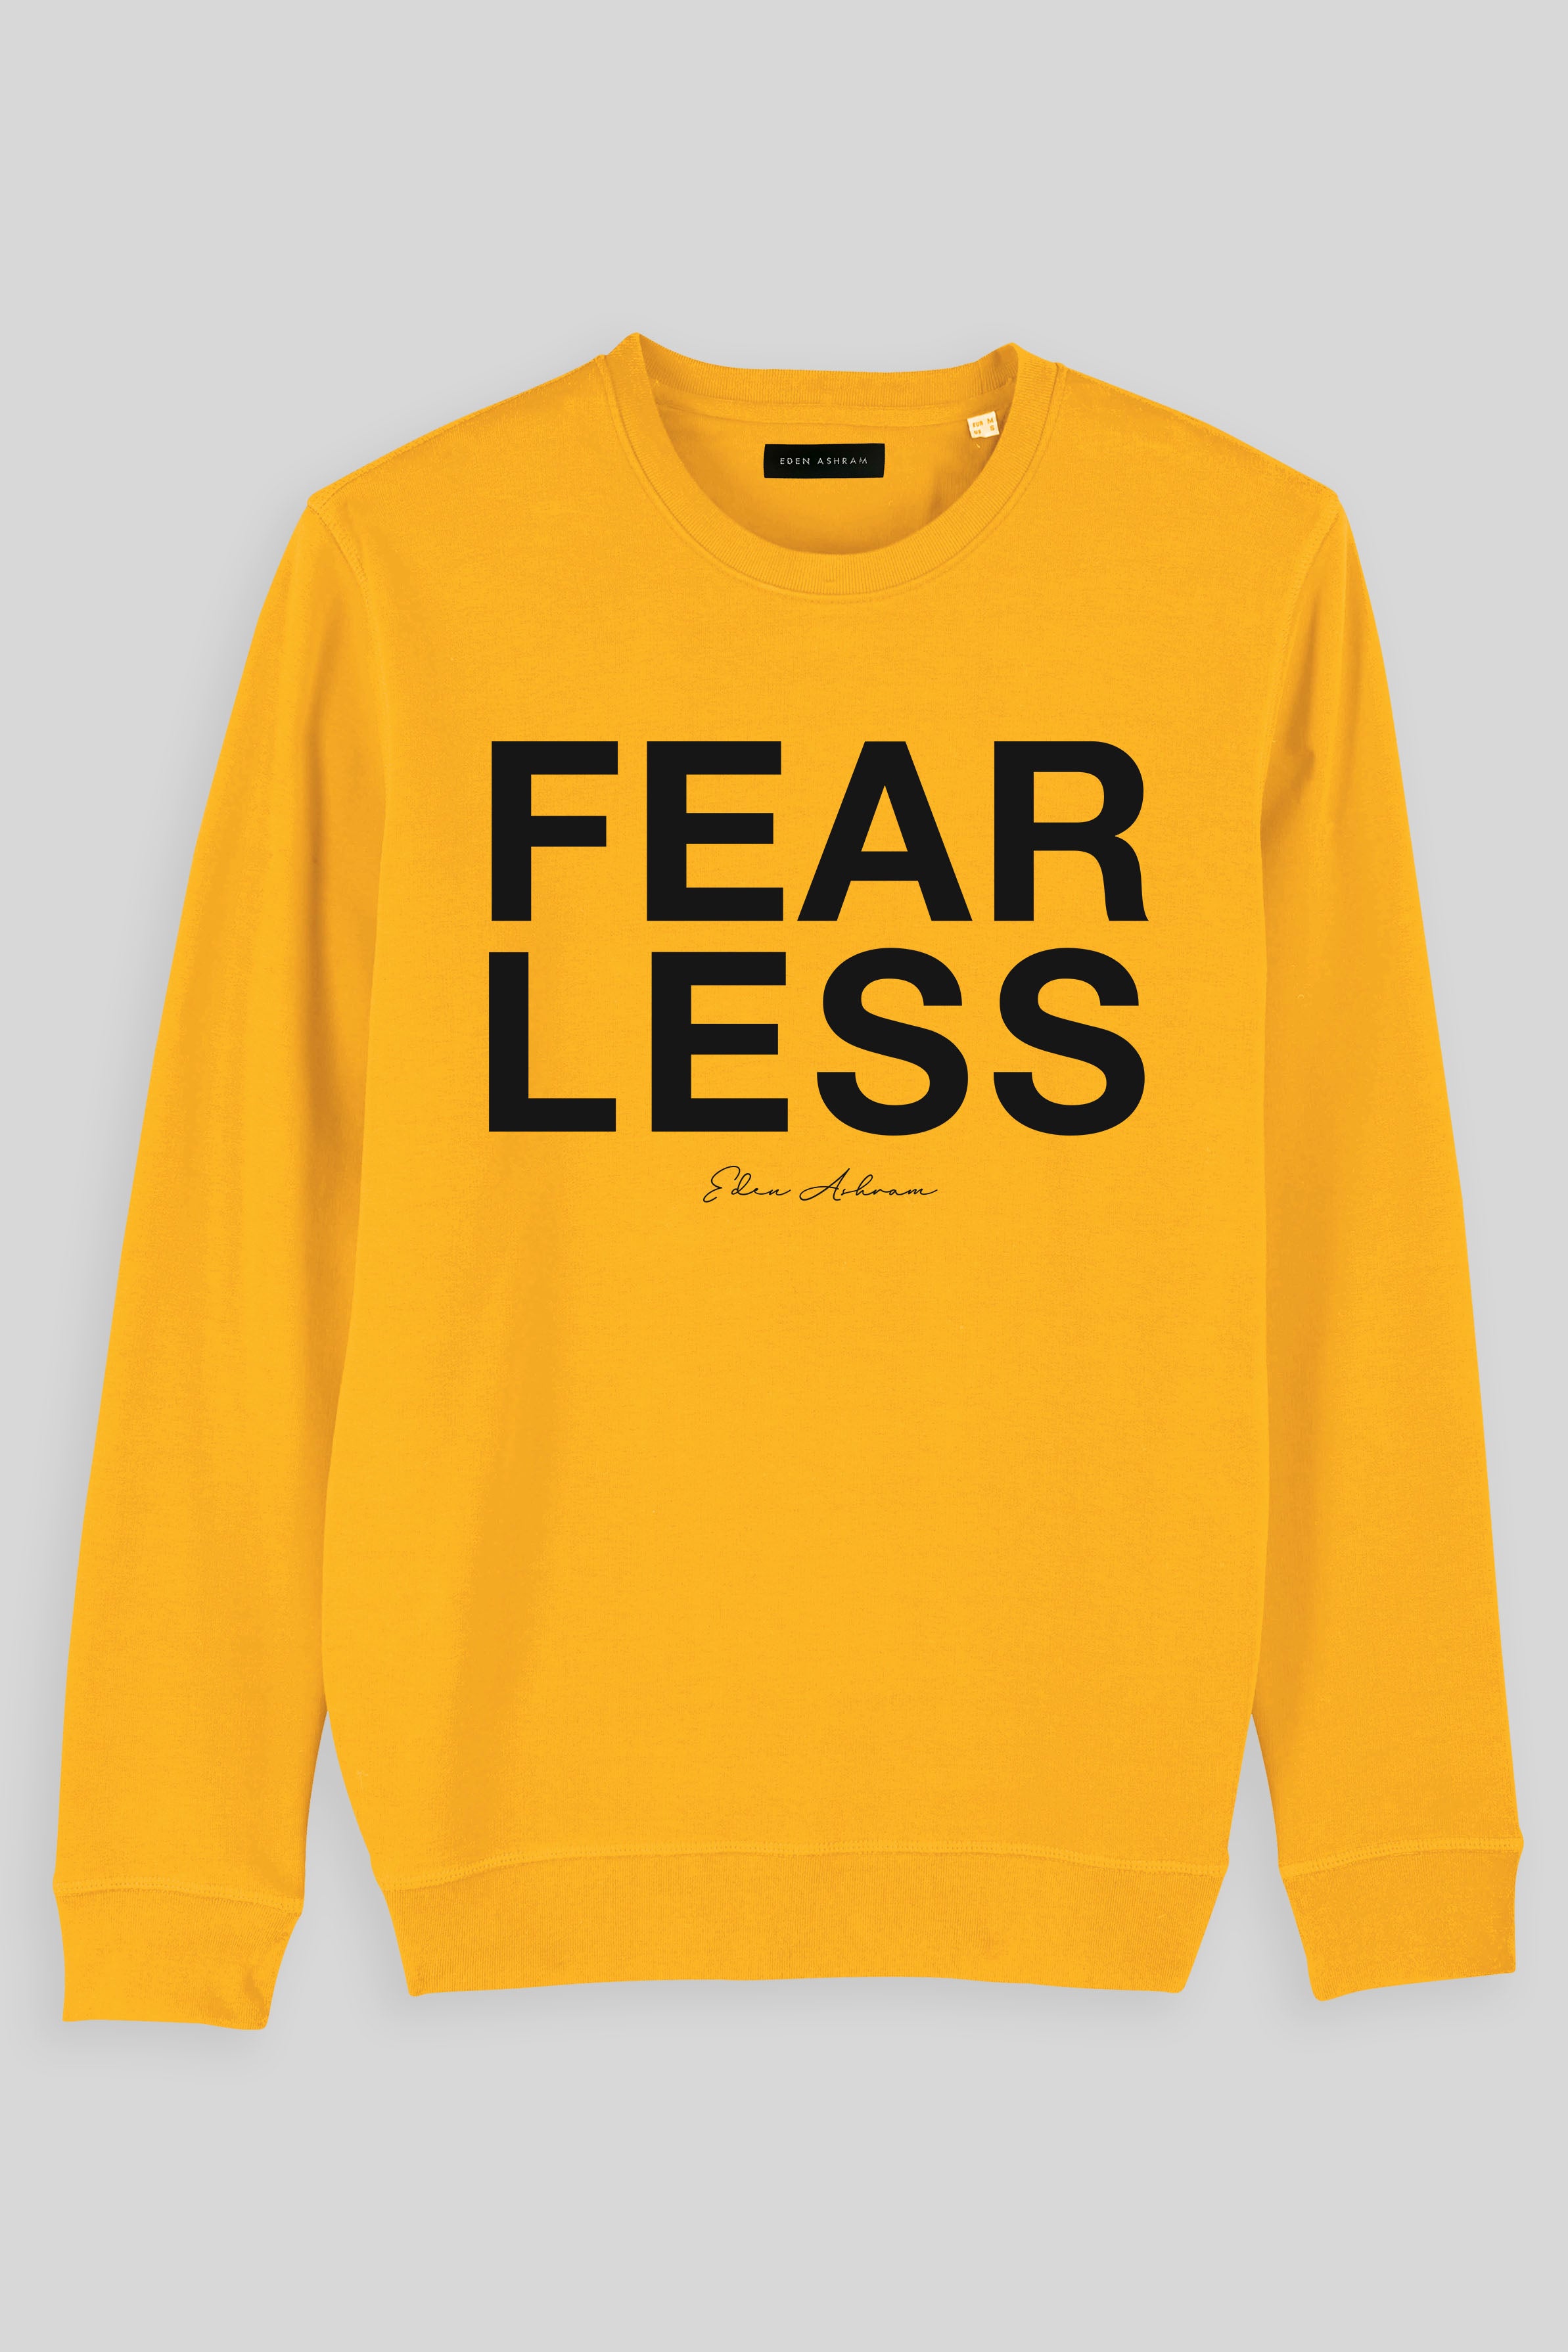 Eden Ashram Fear Less Premium Crew Neck Sweatshirt Spectra Yellow